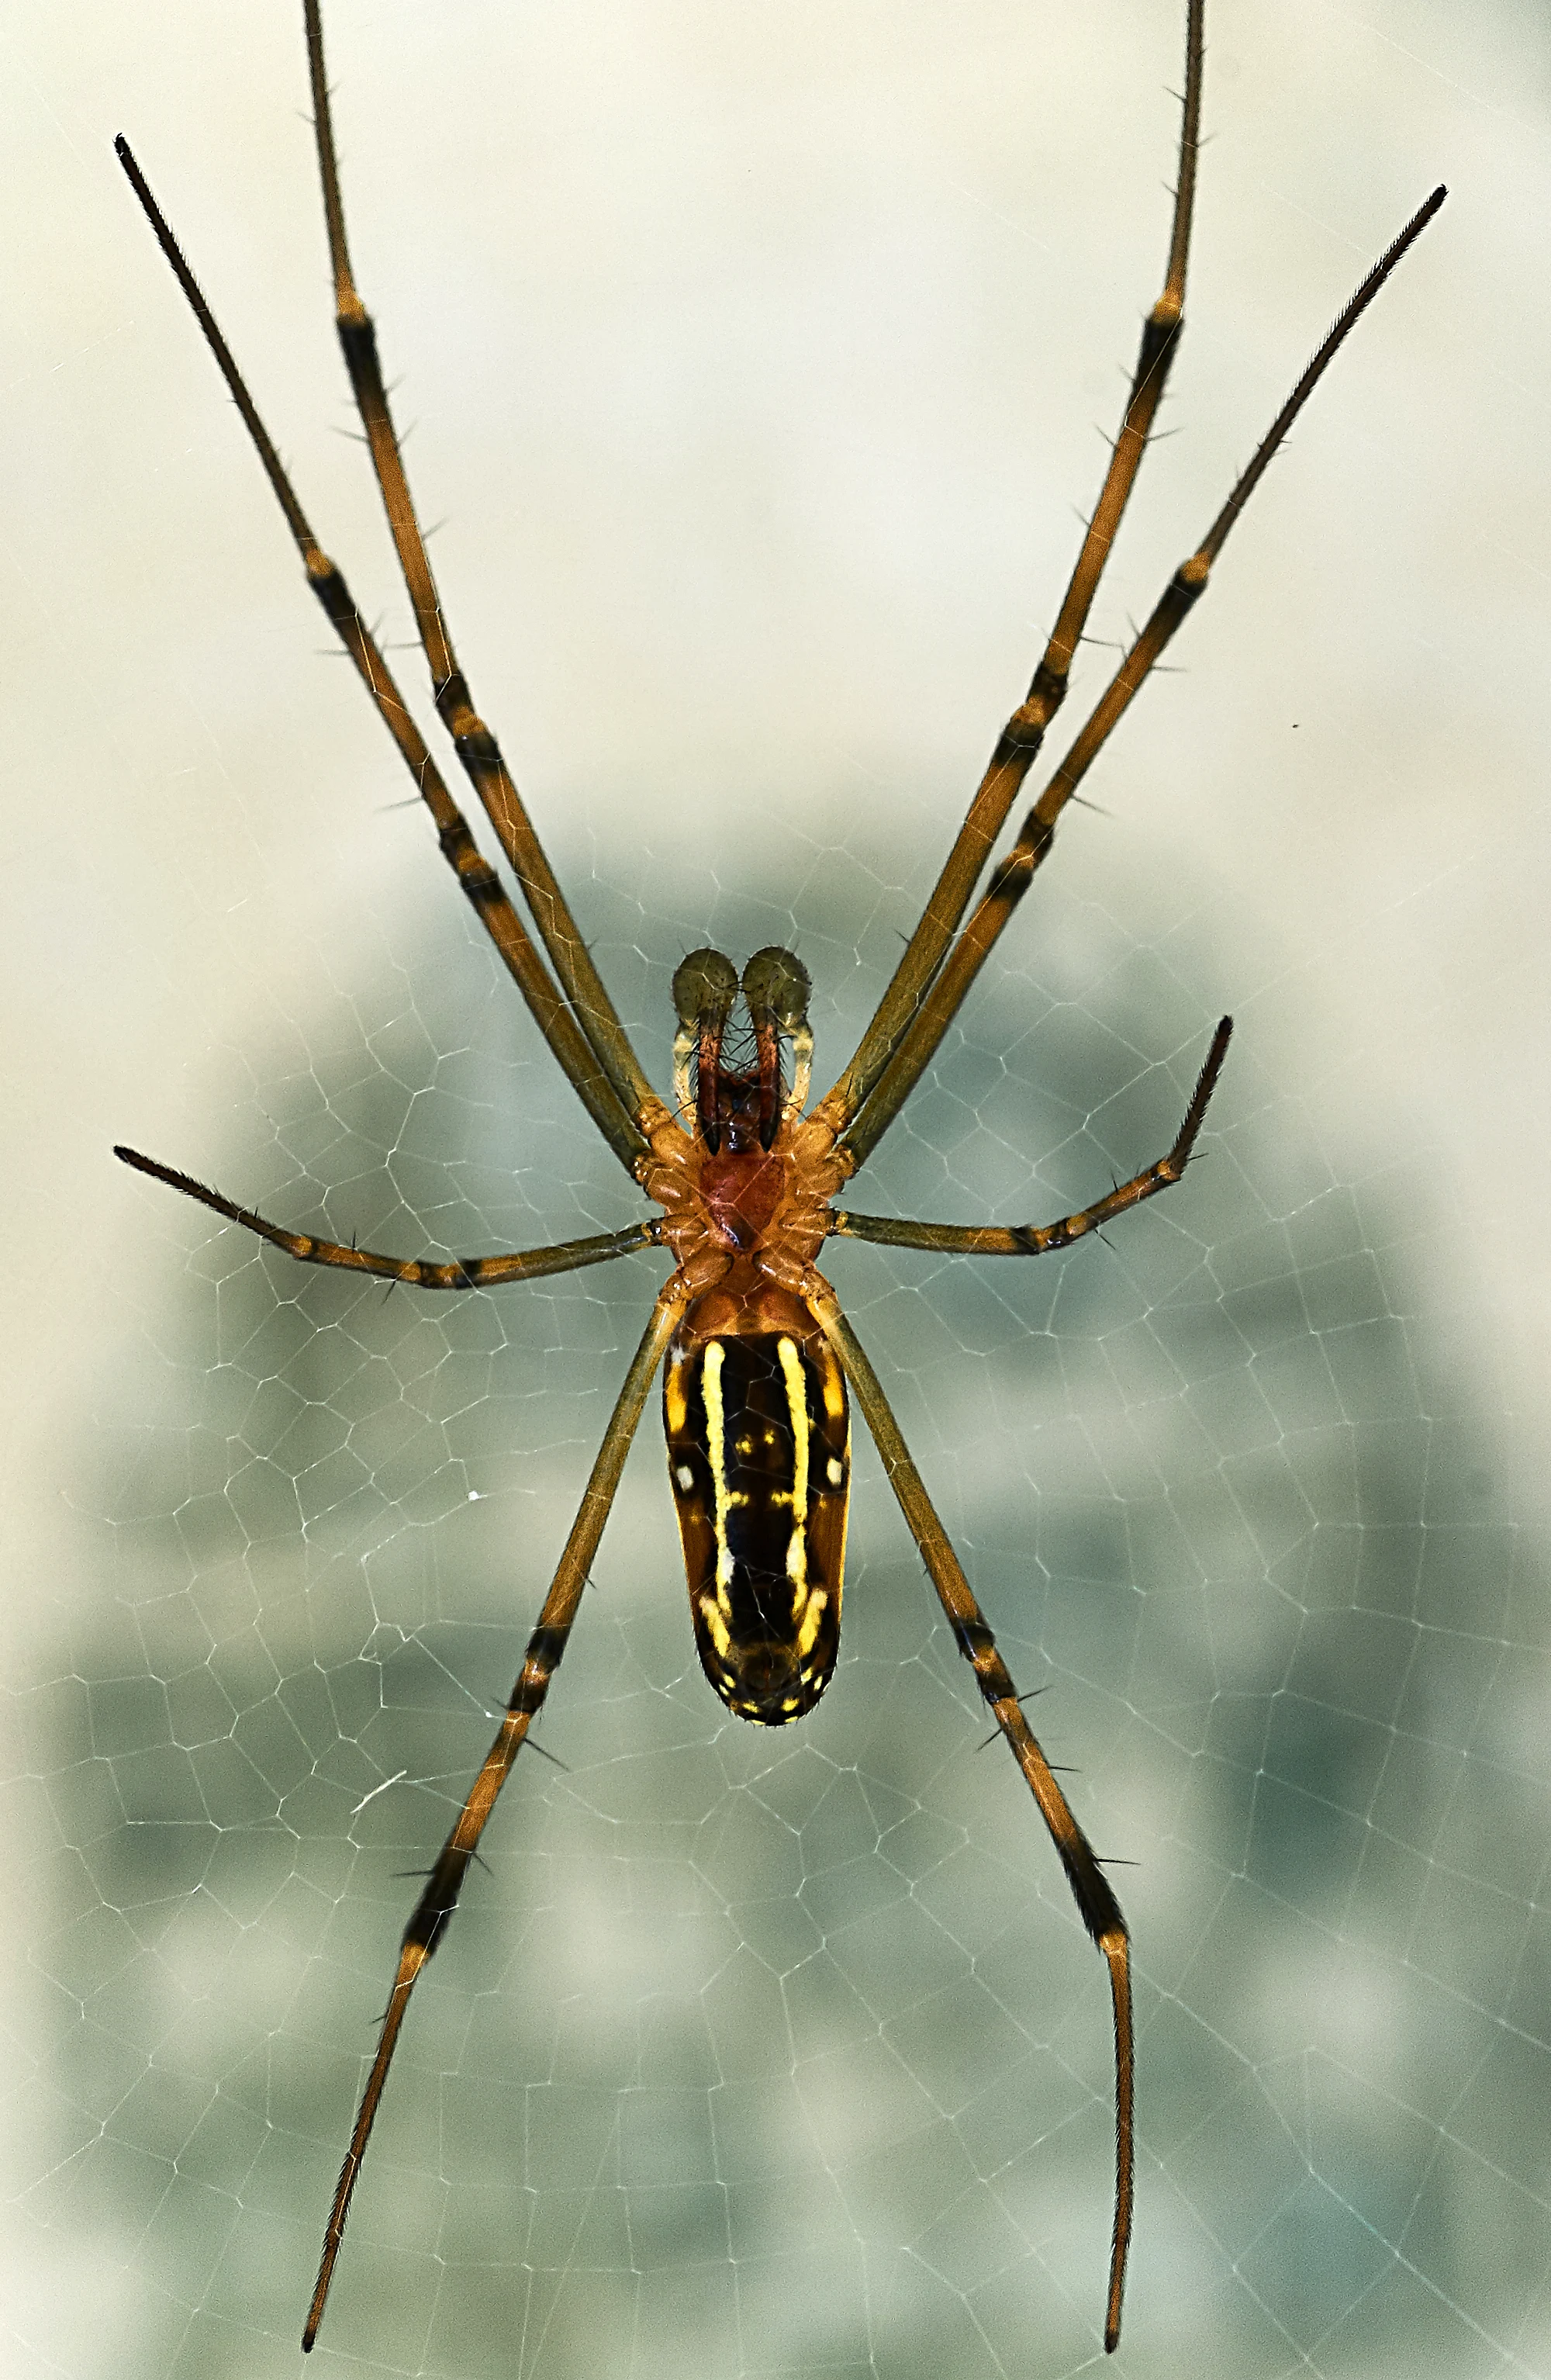 Seriuos Outdoor Spider Close-up